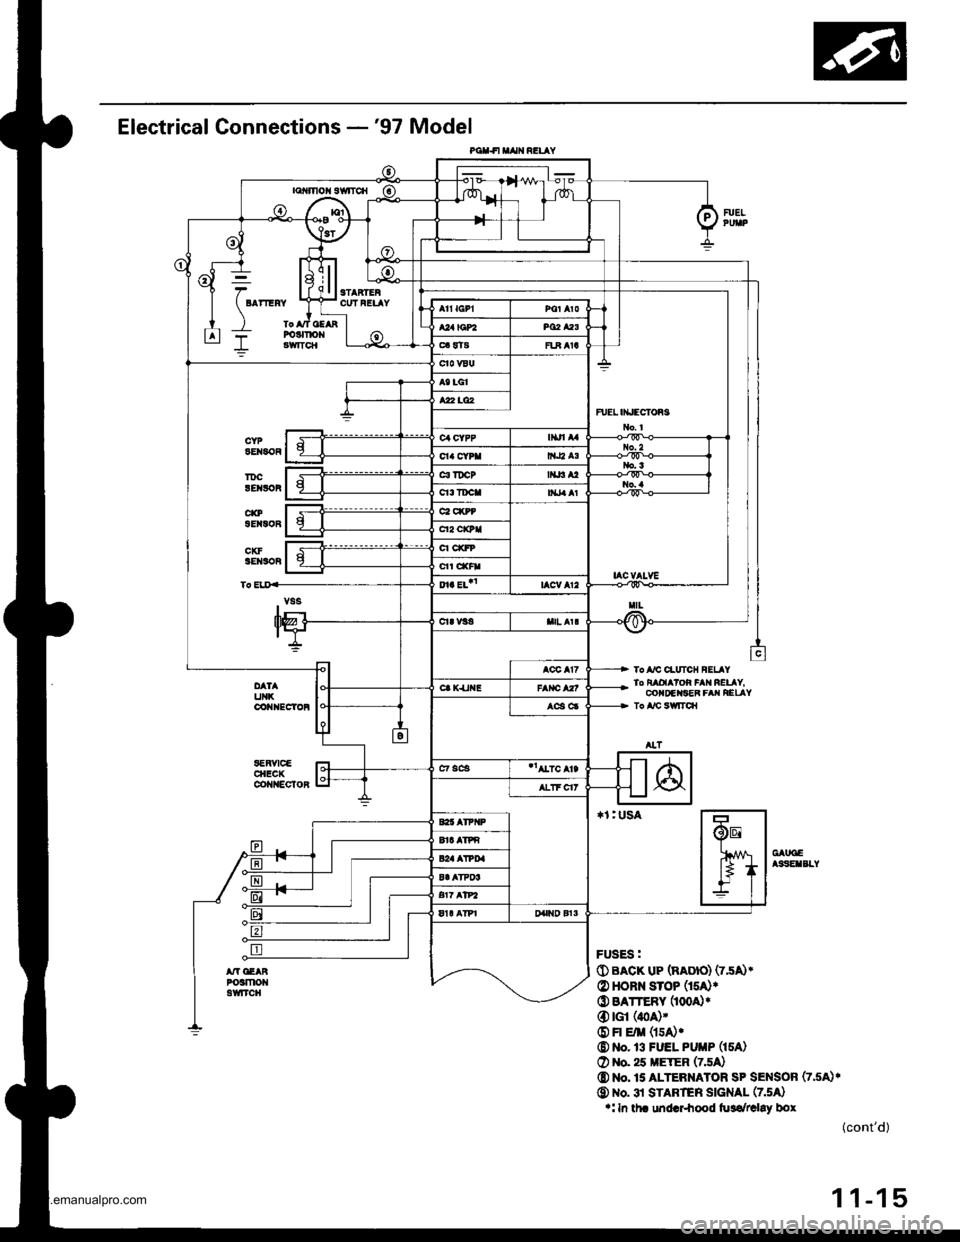 Diagram Chevy Silverado Factory Trailer Wiring Diagram Full Version Hd Quality Wiring Diagram Forexdiagrams Abced It